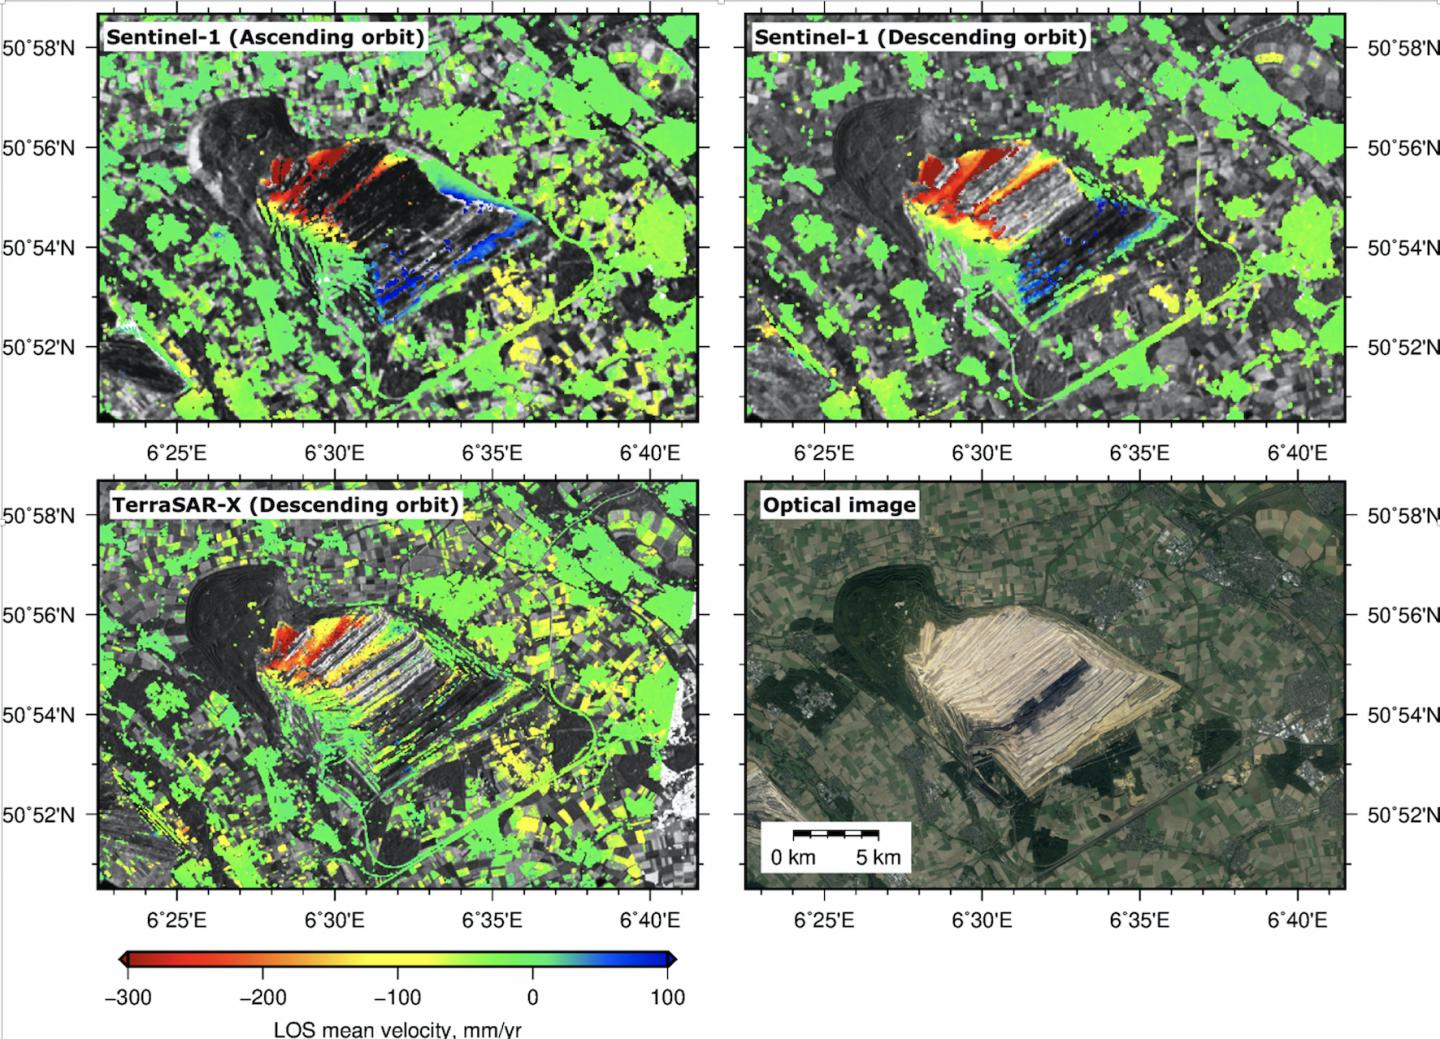 Satellites monitoring open-pit mines